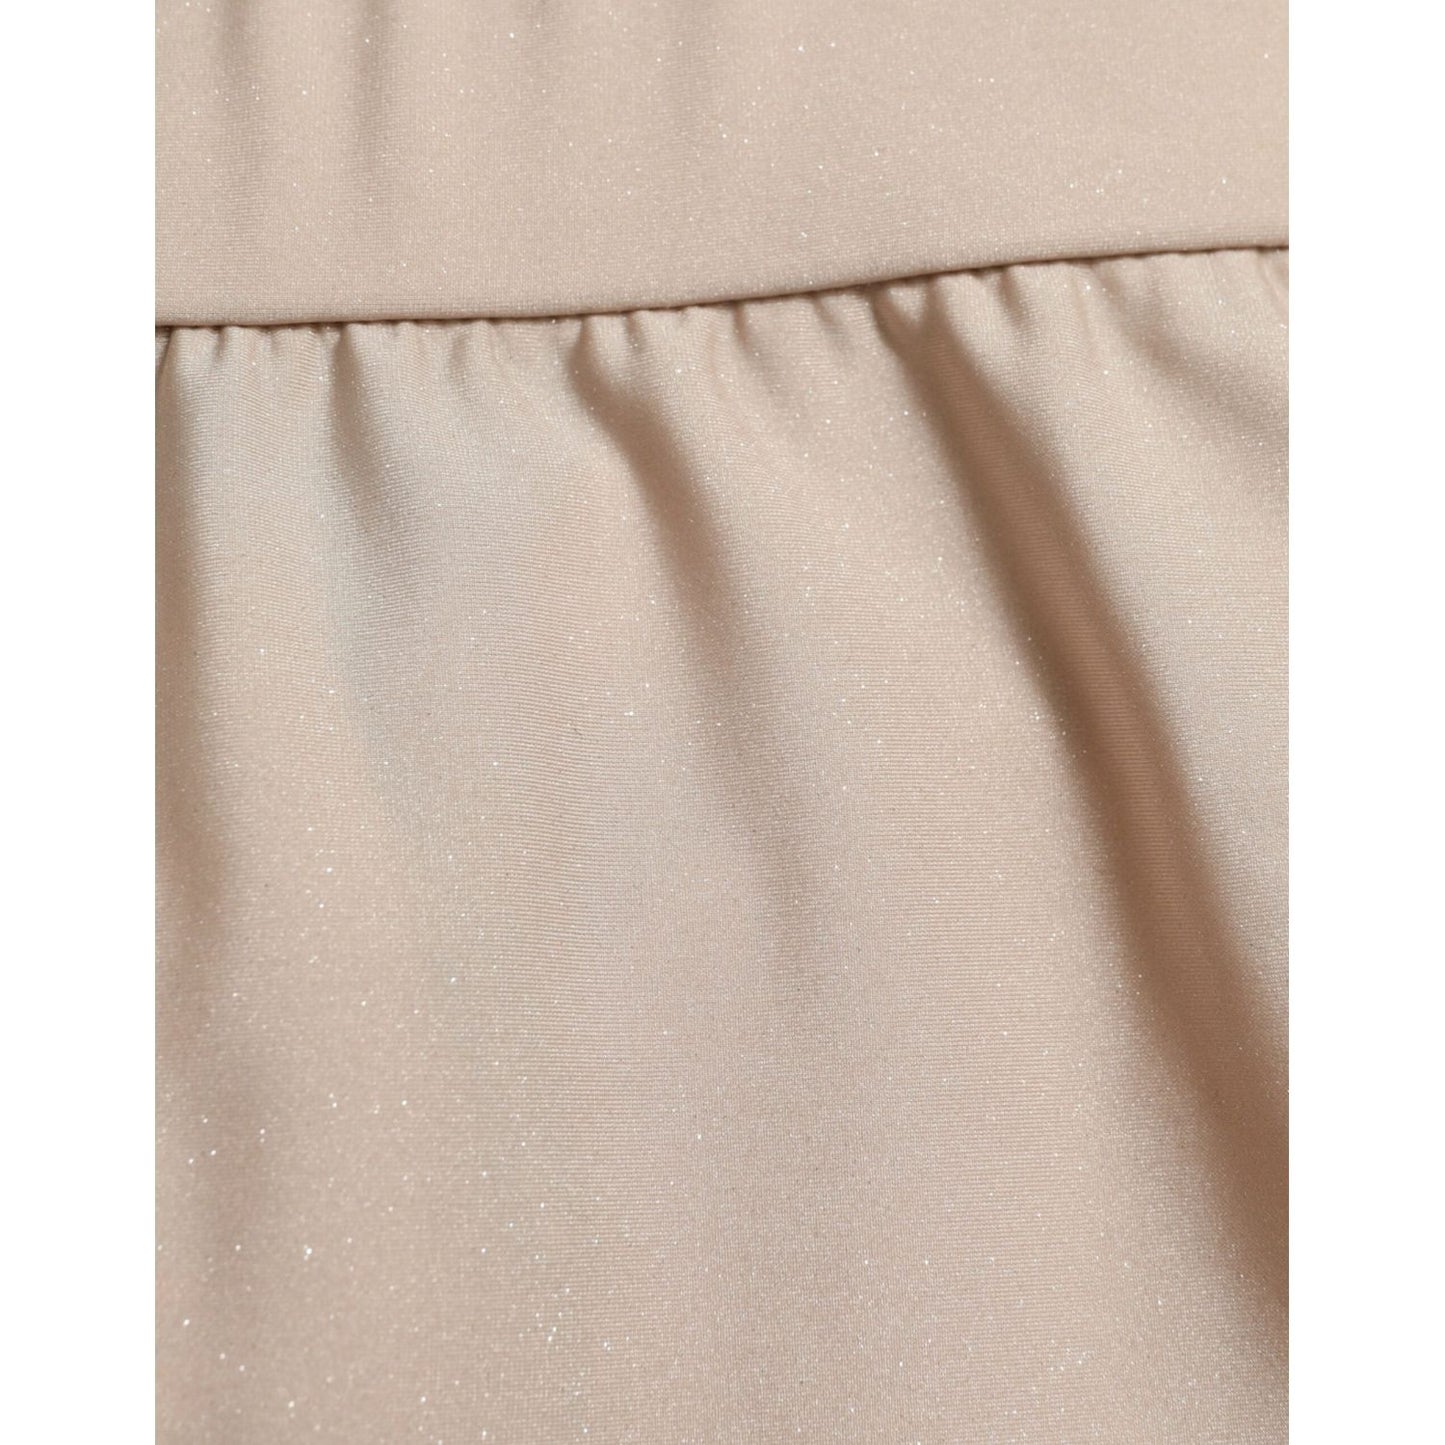 Dolce & Gabbana Chic Beige High Waist Leggings beige-nylon-stretch-slim-leggings-pants